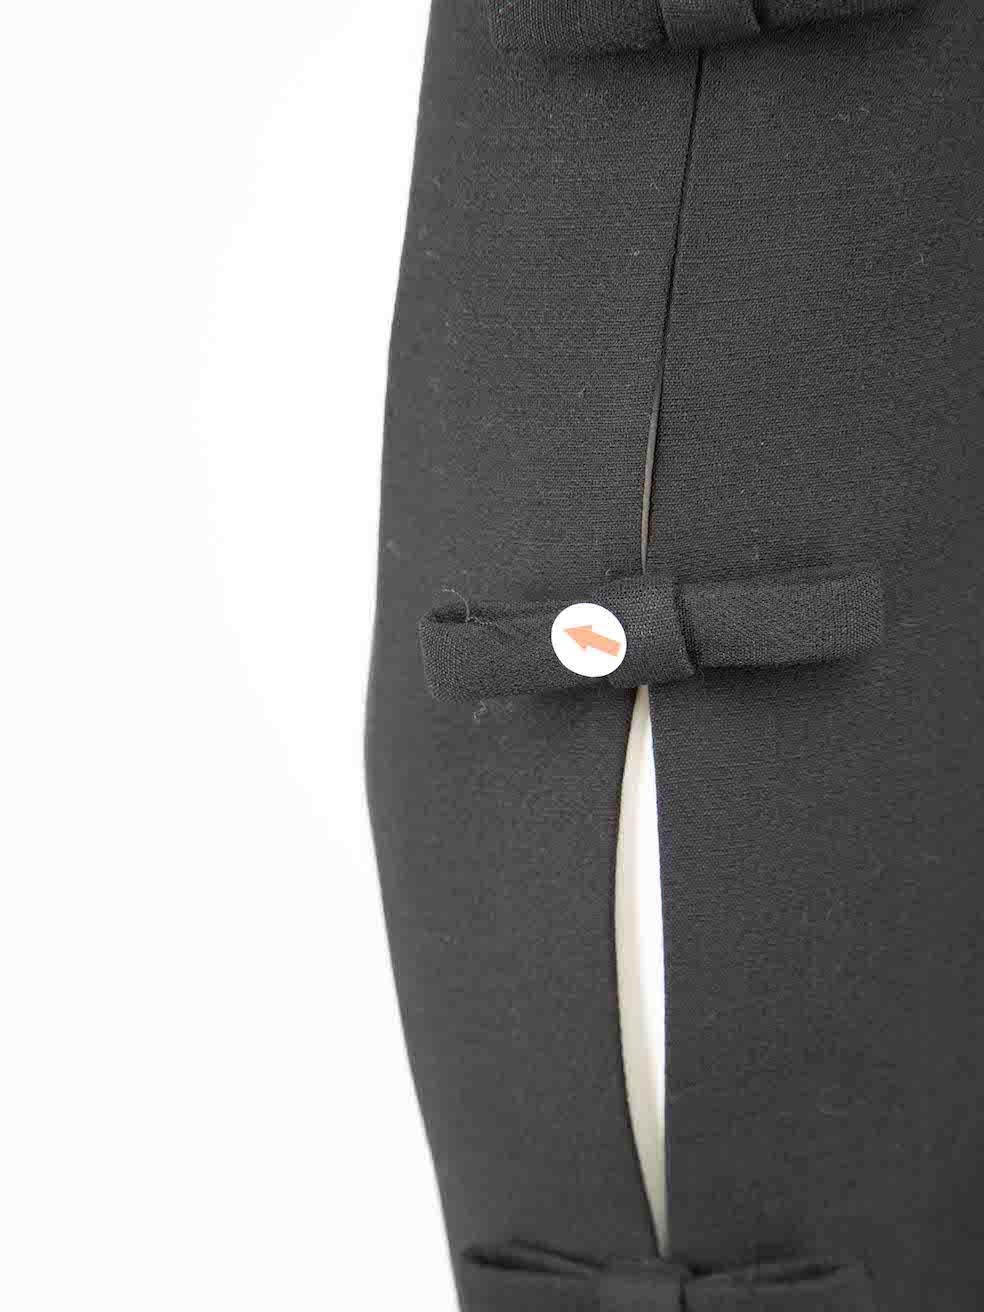 Valentino Garavani Black Wool Bow Detail Long Sleeve Top Size XS For Sale 1